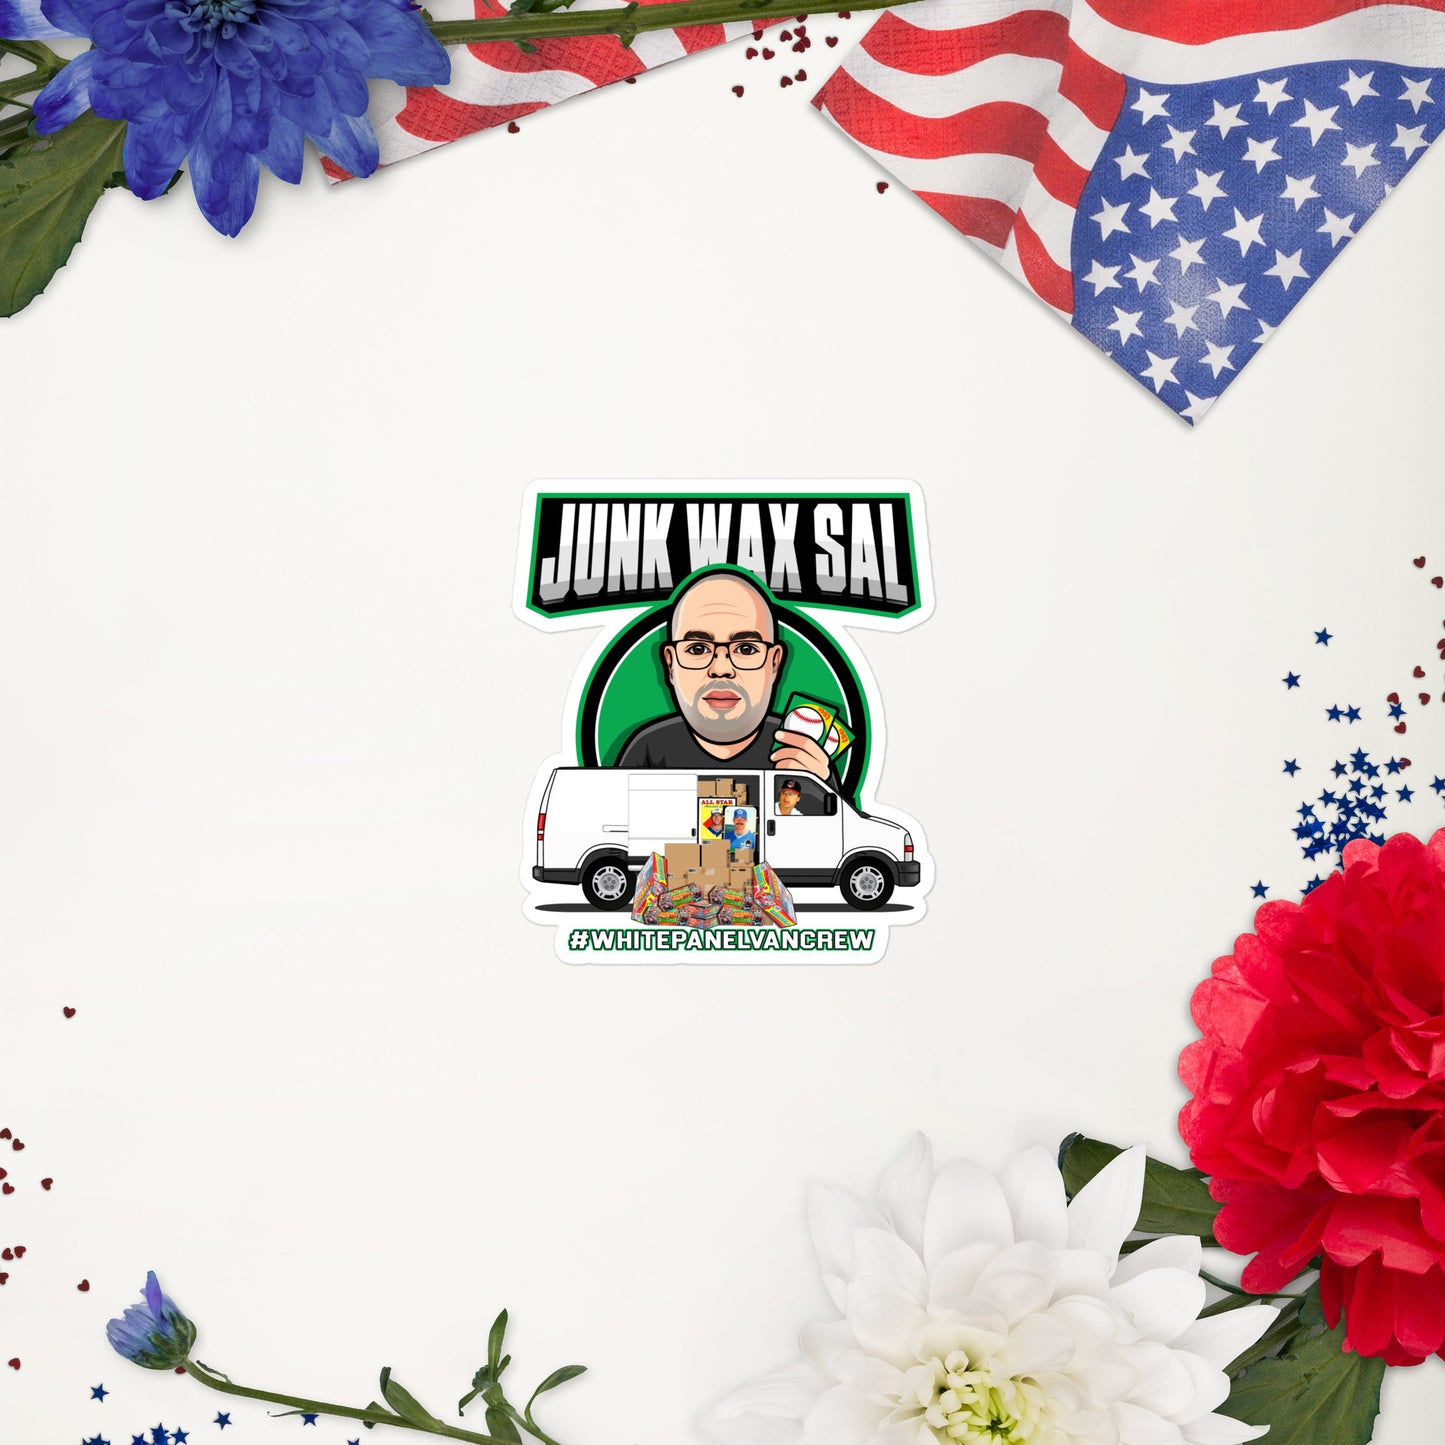 Junk Wax Sal - White Panel Van Crew - Bubble-free stickers